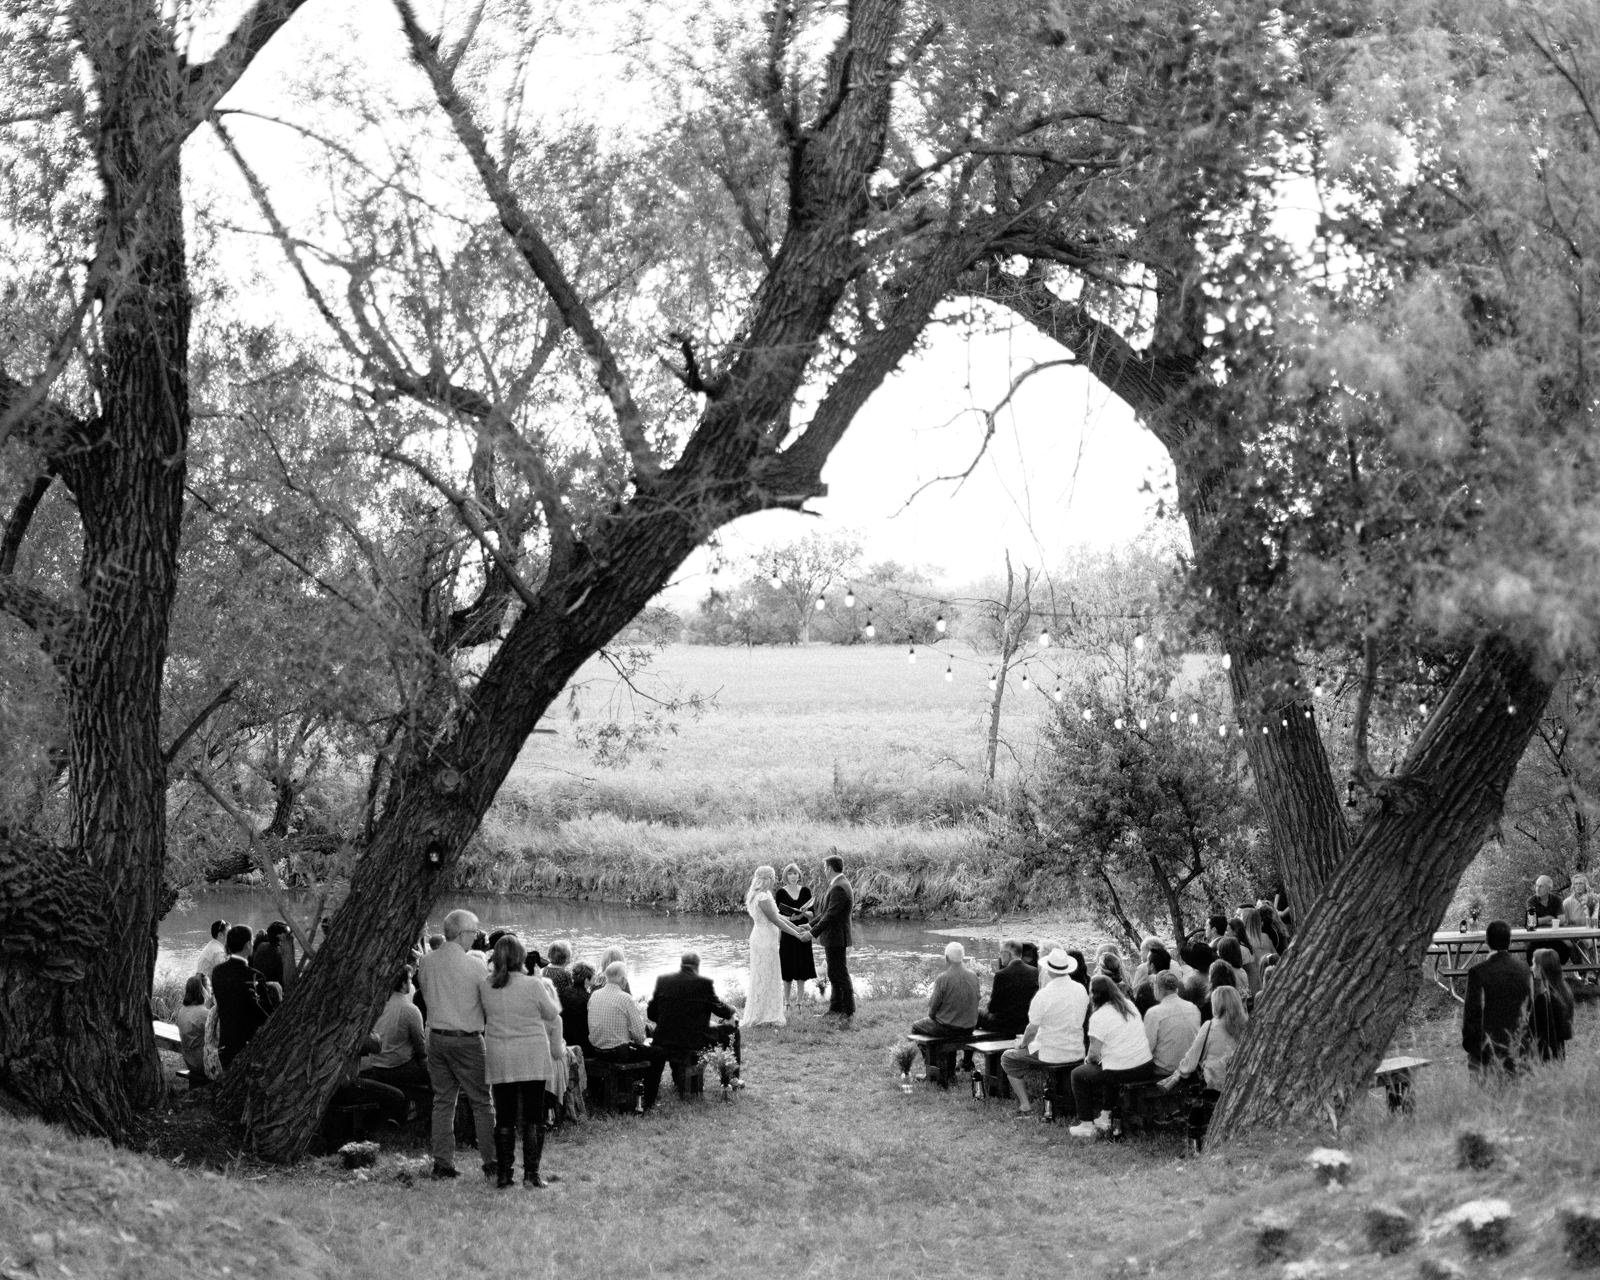 creekside-wedding-beer-tent-reception-sioux-falls-rapid-city-south-dakota-photographer-michael-liedtke025.jpg